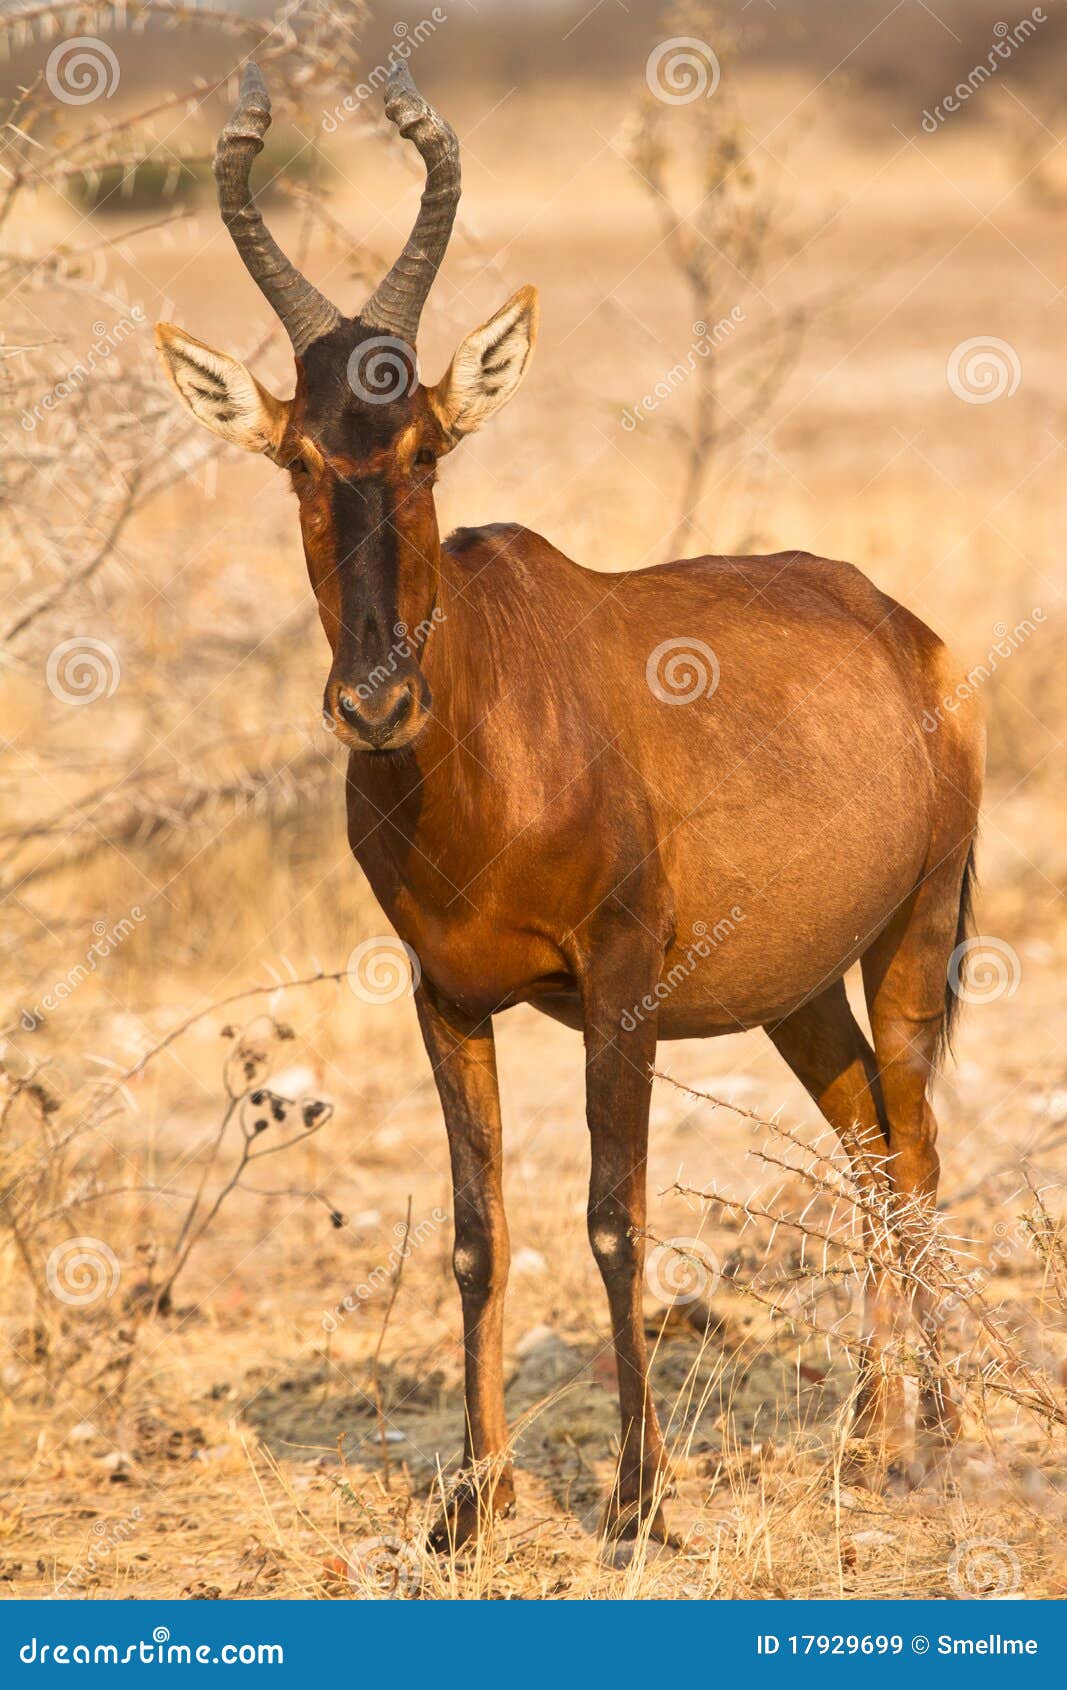 red hartebeest antelope